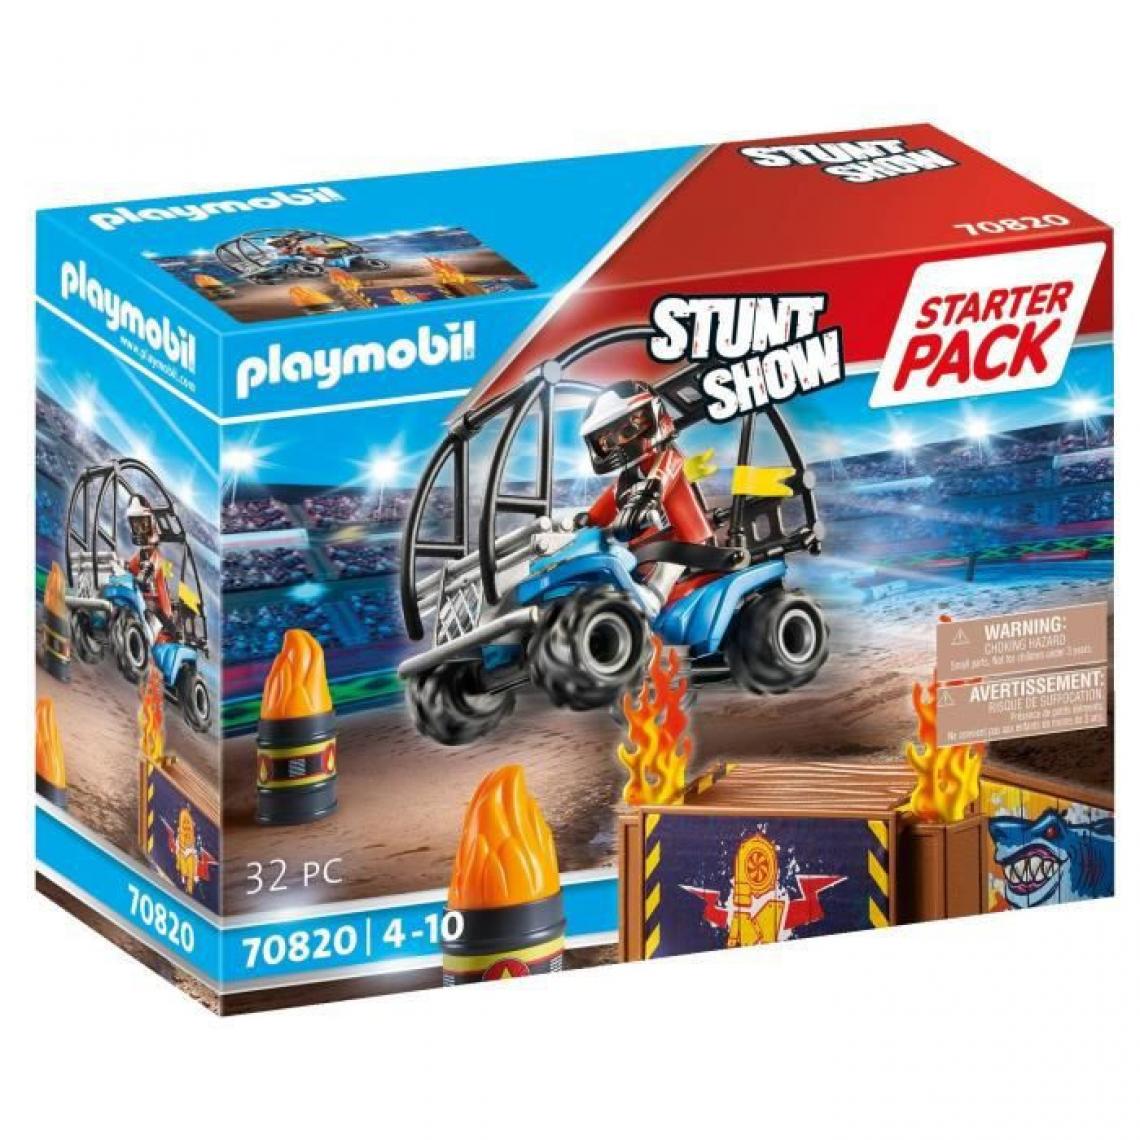 Playmobil - PLAYMOBIL - 70820 - Starter Pack Stuntshow avec rampe - Playmobil